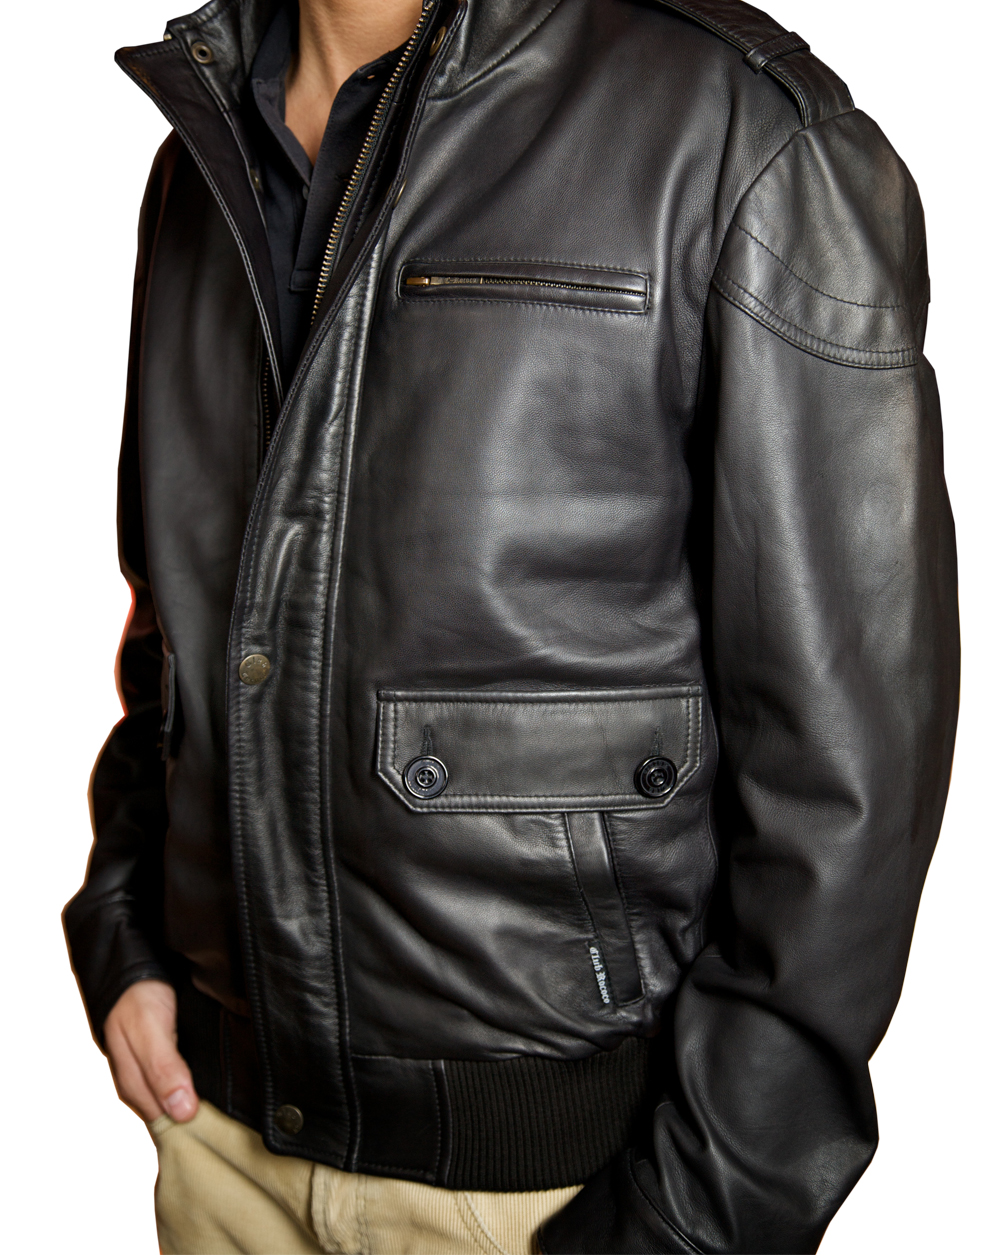 Ferrand Ferrand men's leather jacket